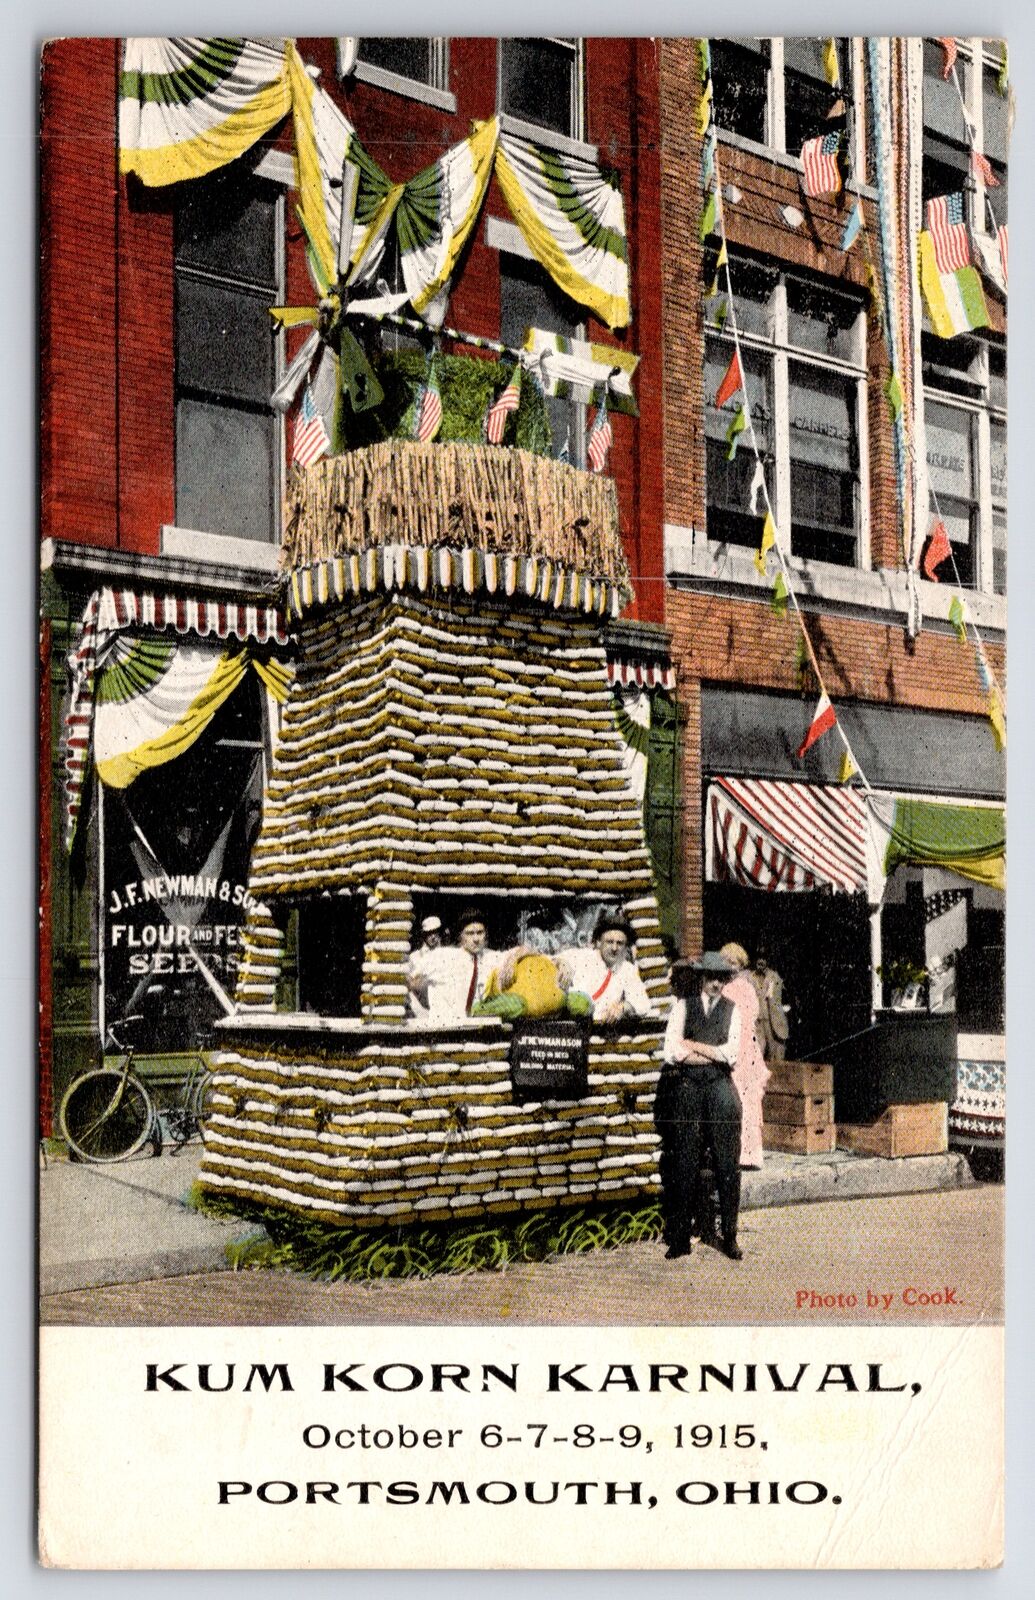 Portsmouth Ohio~Our Kum Korn Karnival~JF Newman & Son Flour & Feed~Seeds 1915